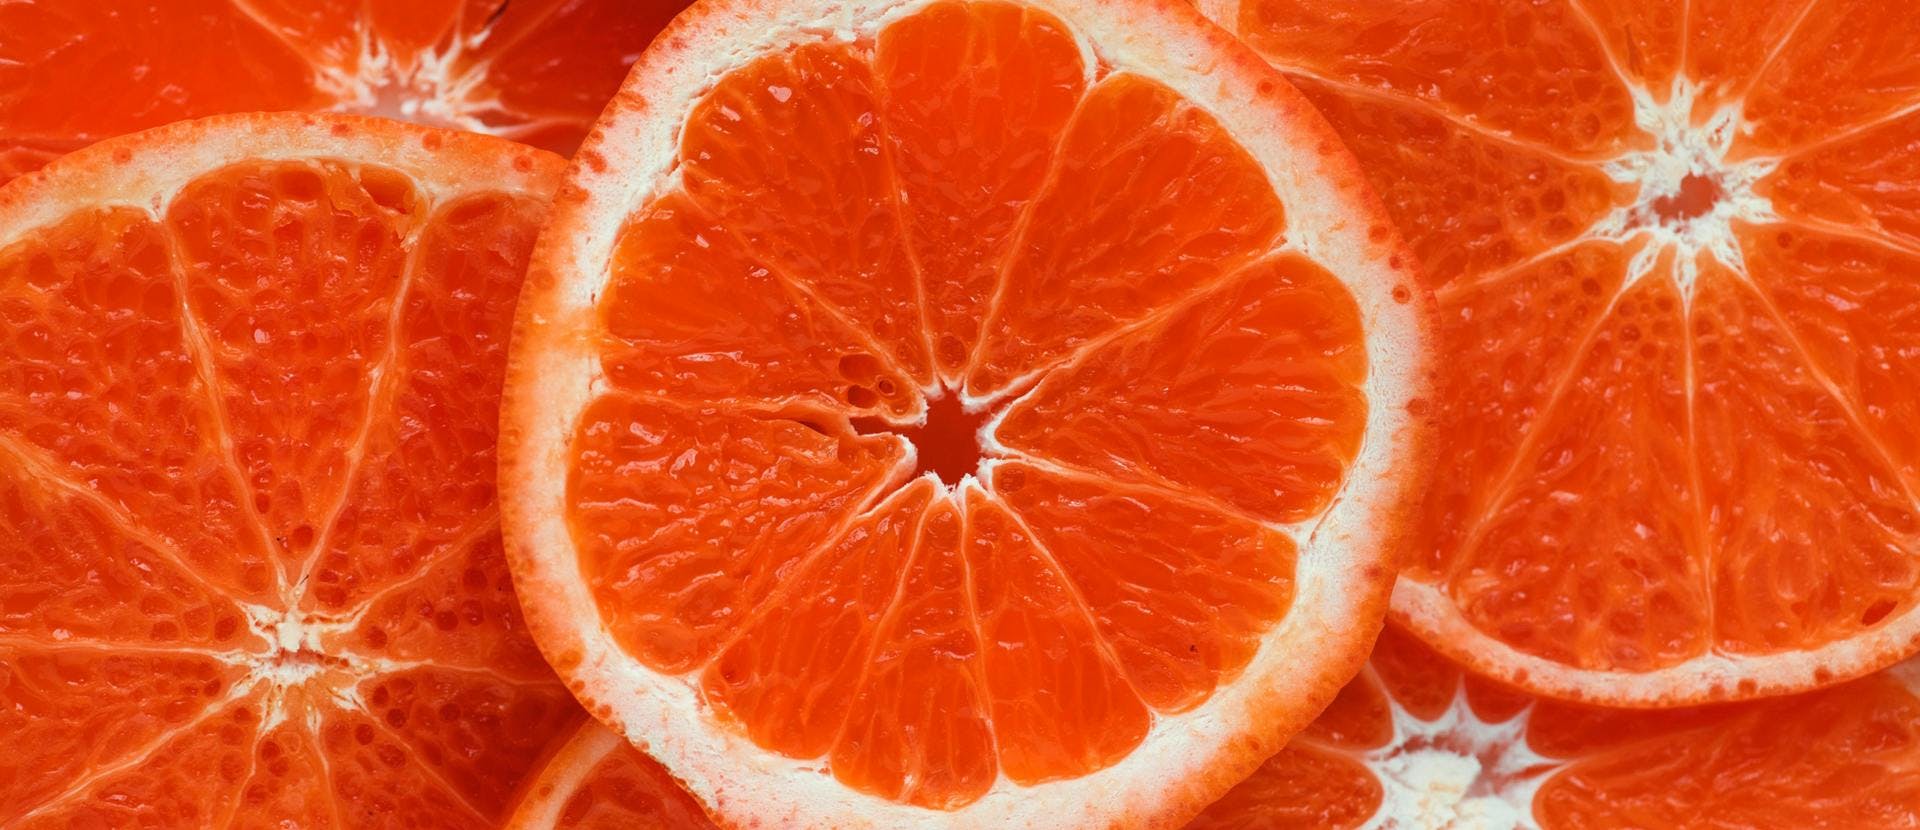 fruit plant citrus fruit food produce grapefruit orange